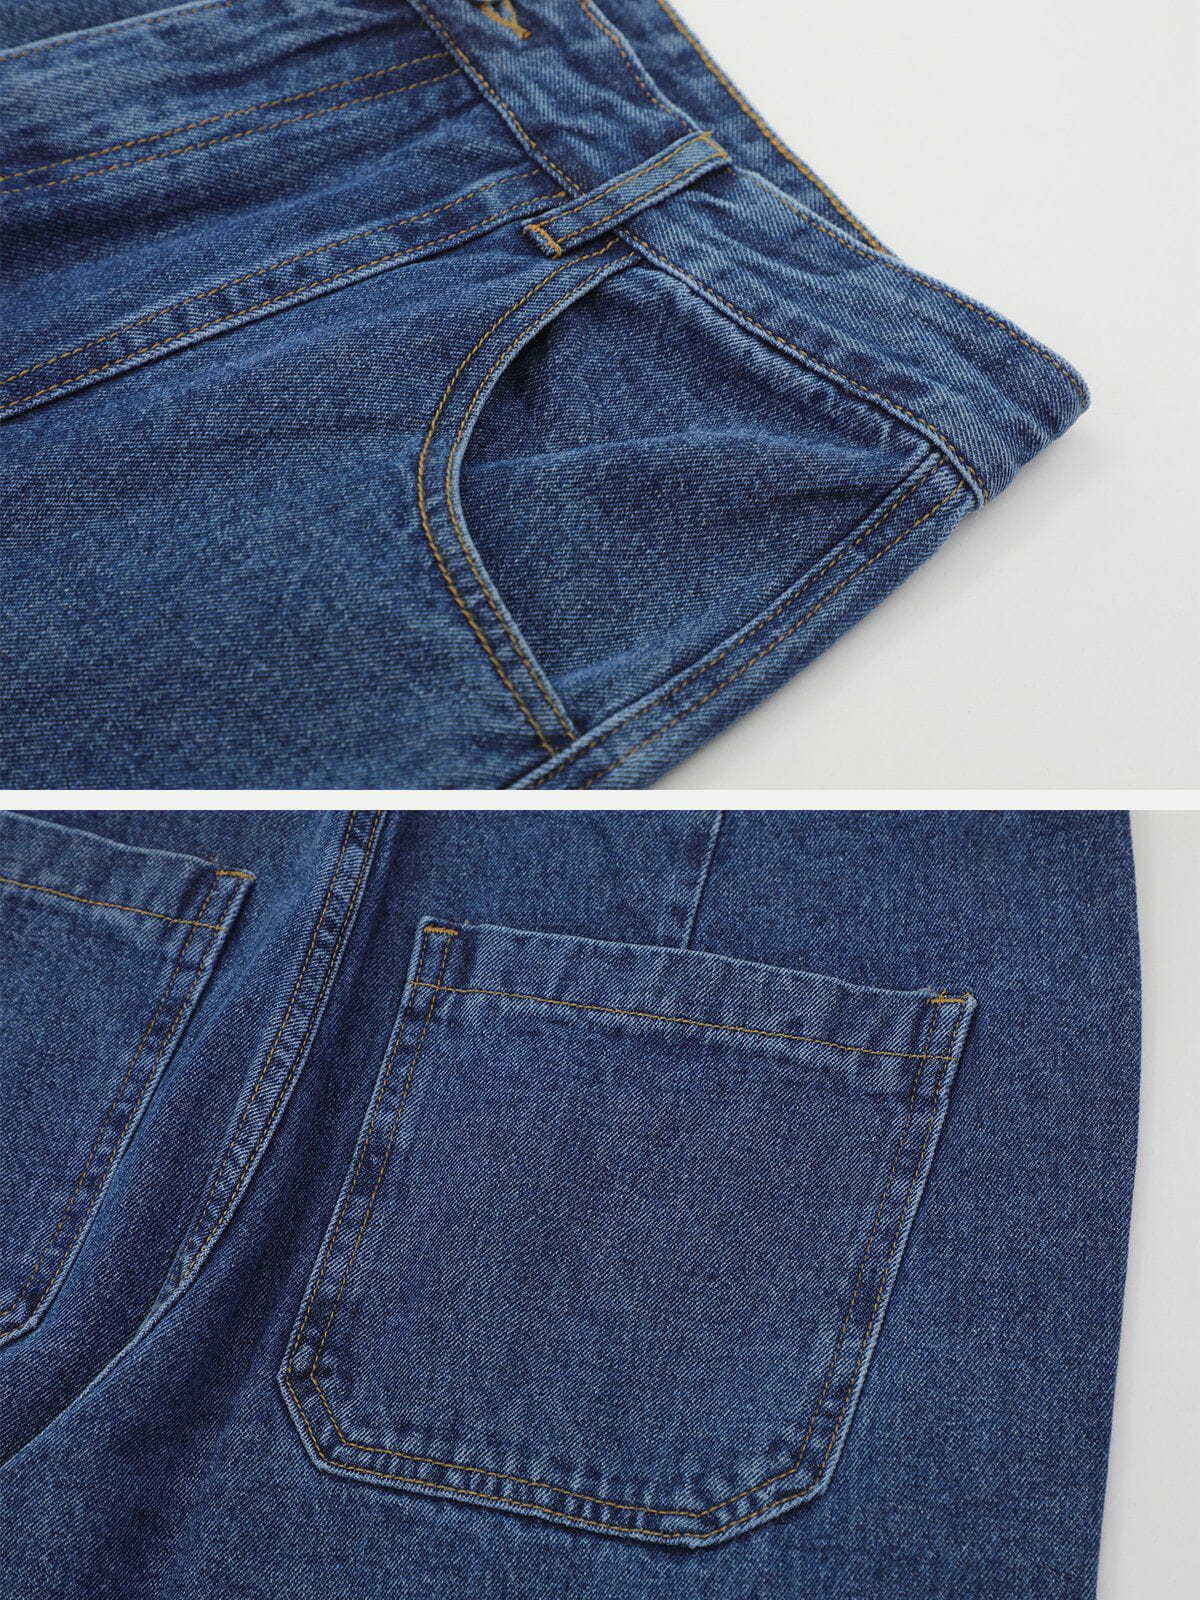 vintage patched pocket jeans edgy y2k streetwear 7603